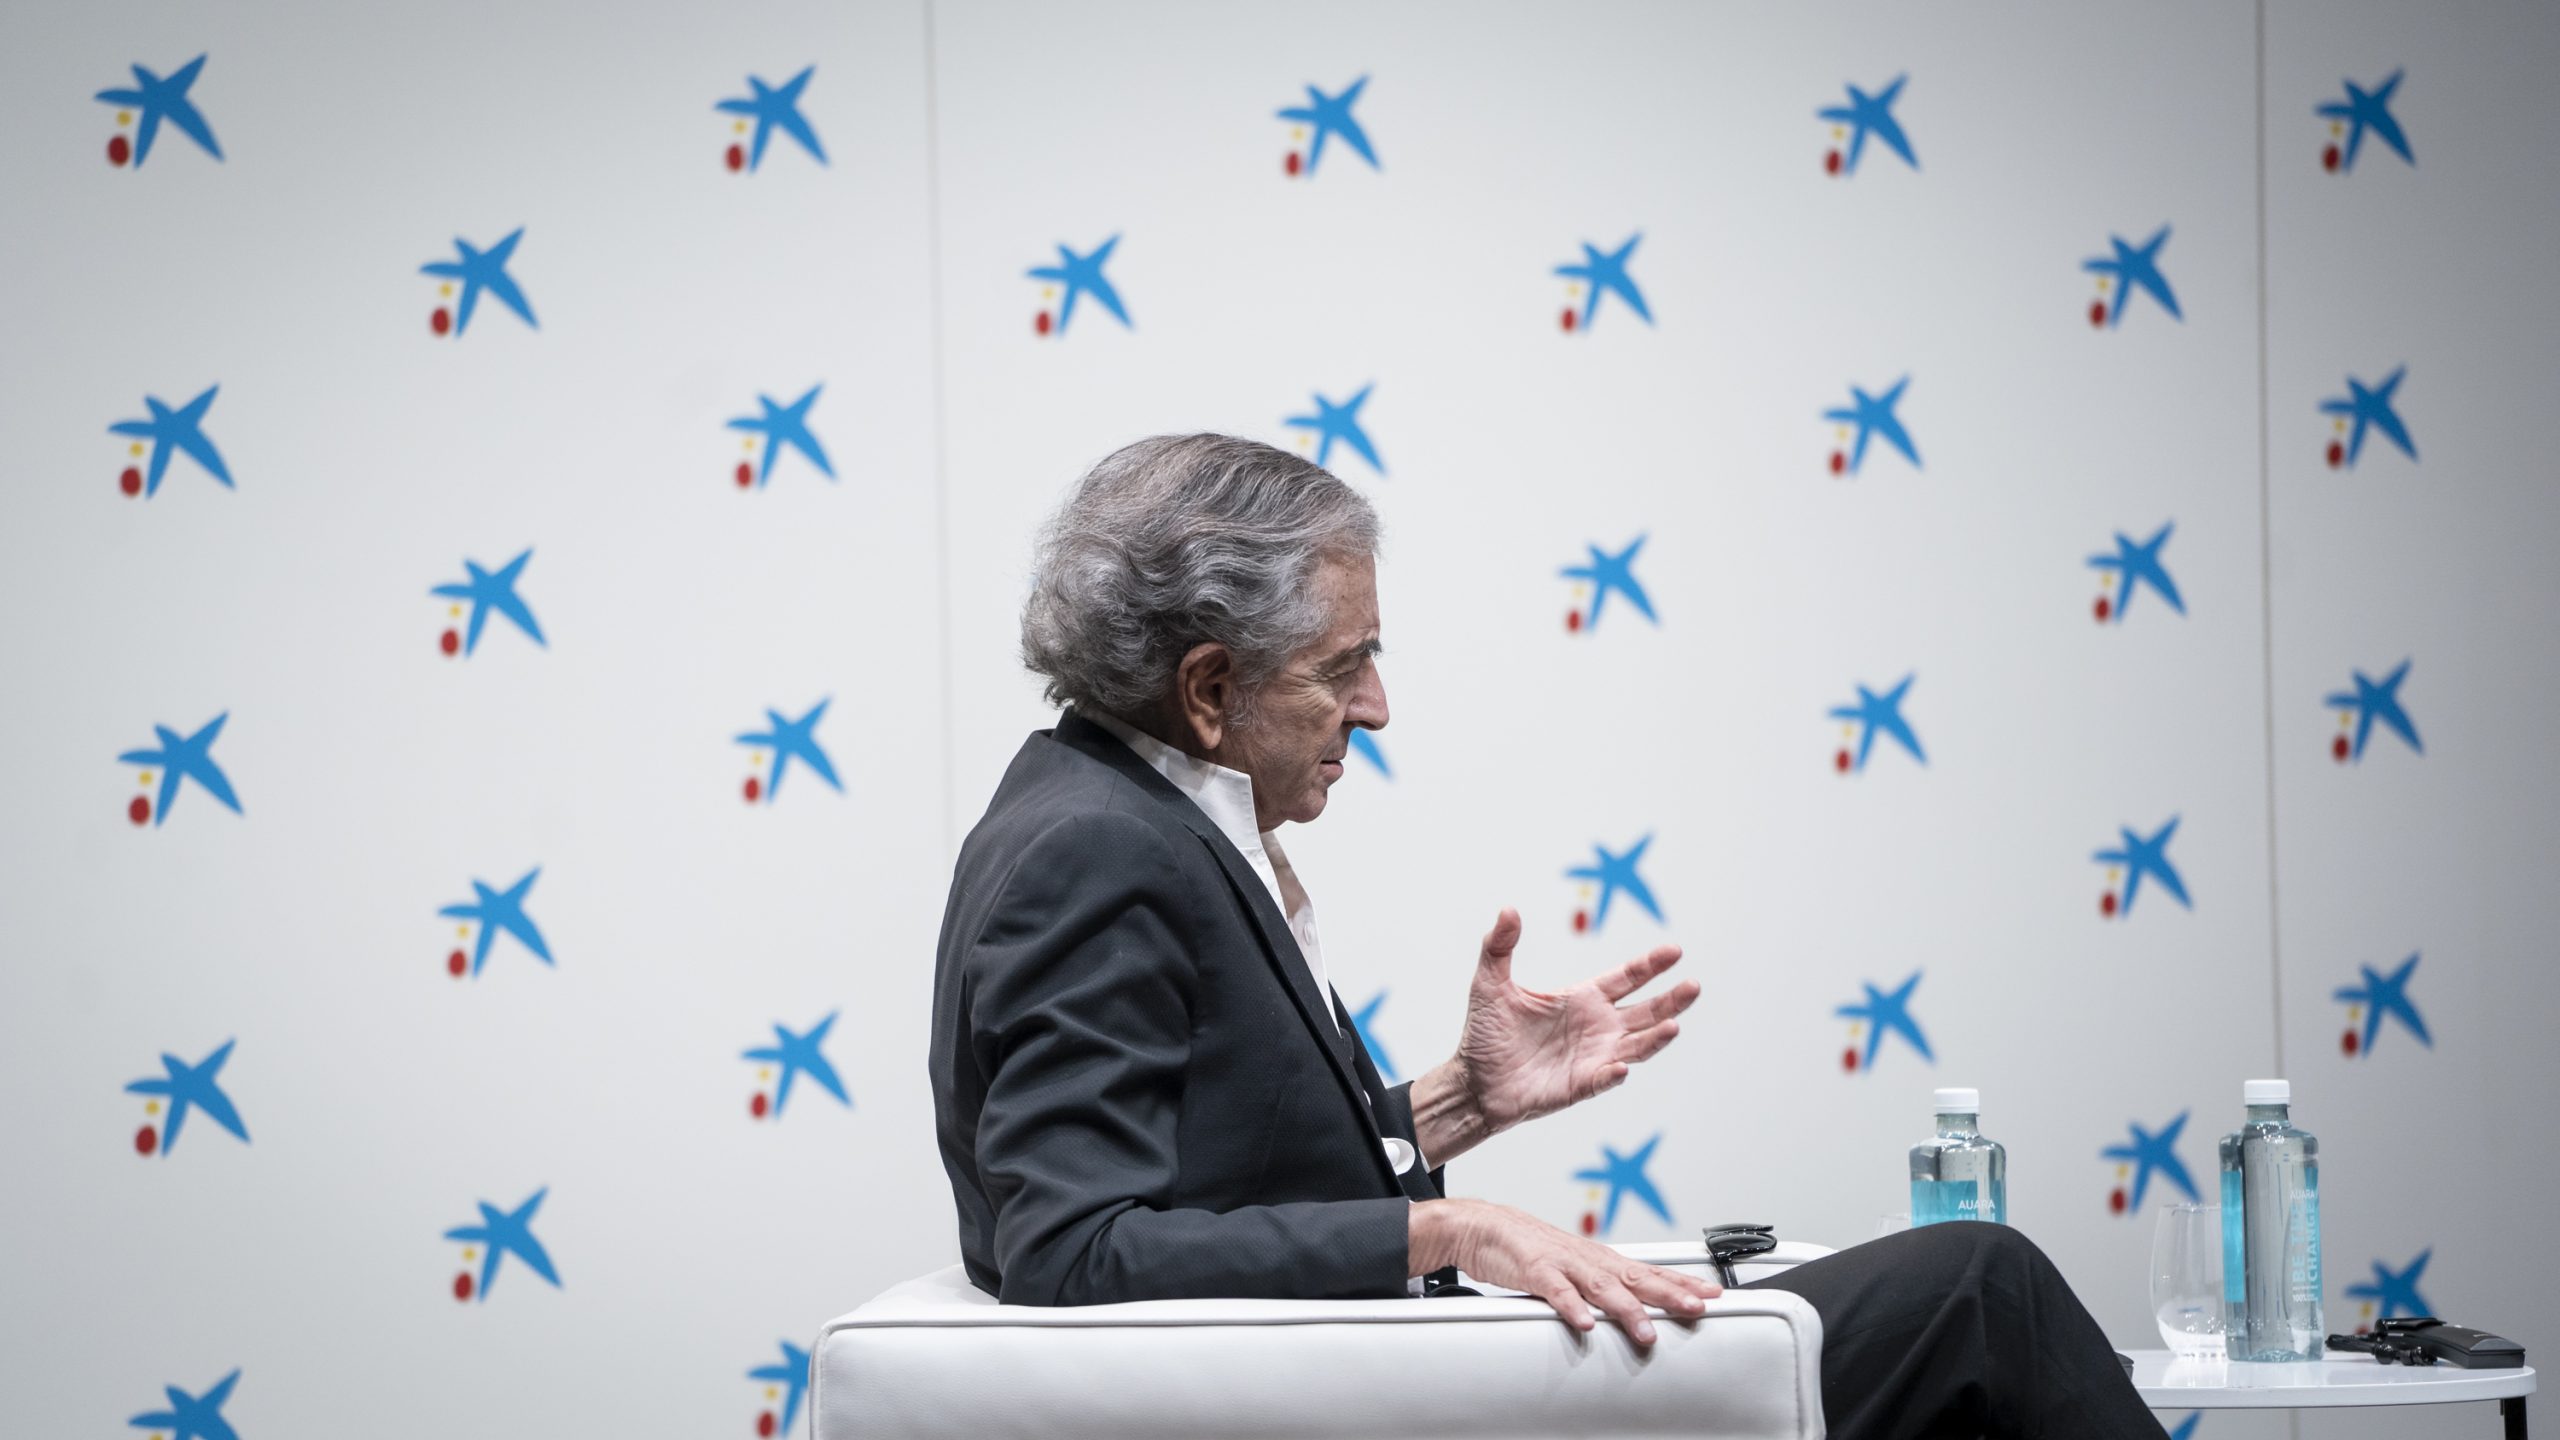 Bernard-Henri Lévy answers questions from Pedro J. Ramírez, the president of "El Español".